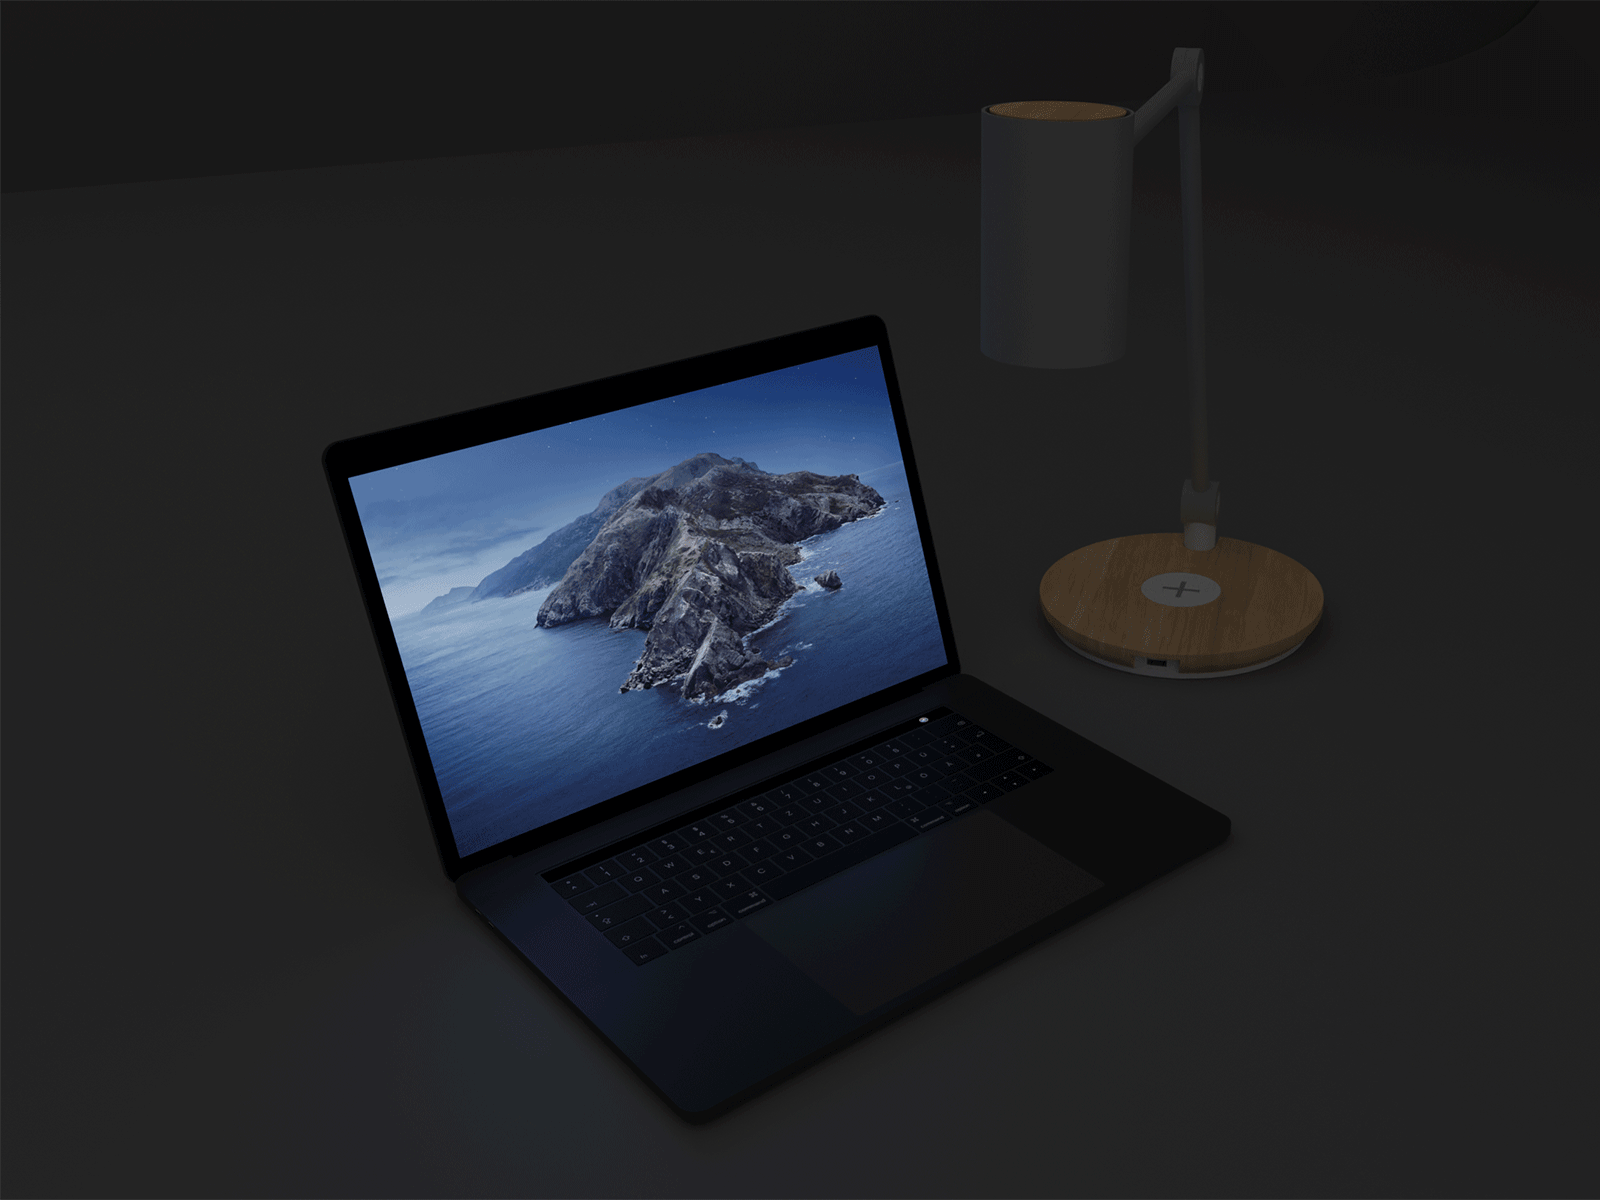 Desk Scene with MacBook Pro and Desk Lamp